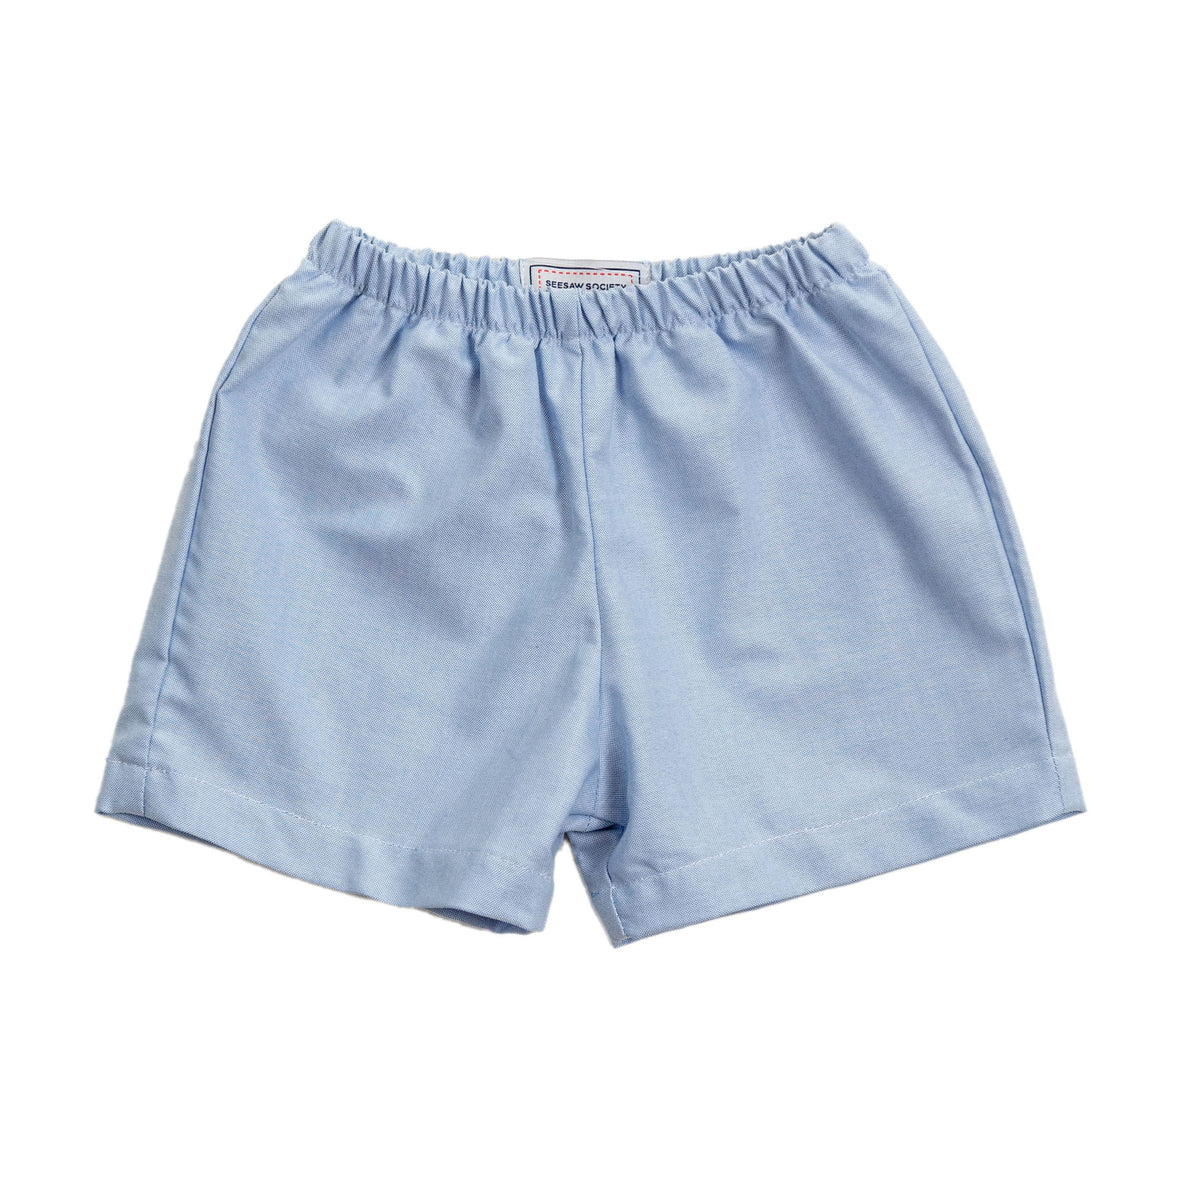 Boys Shorts, Cape Cod Blue